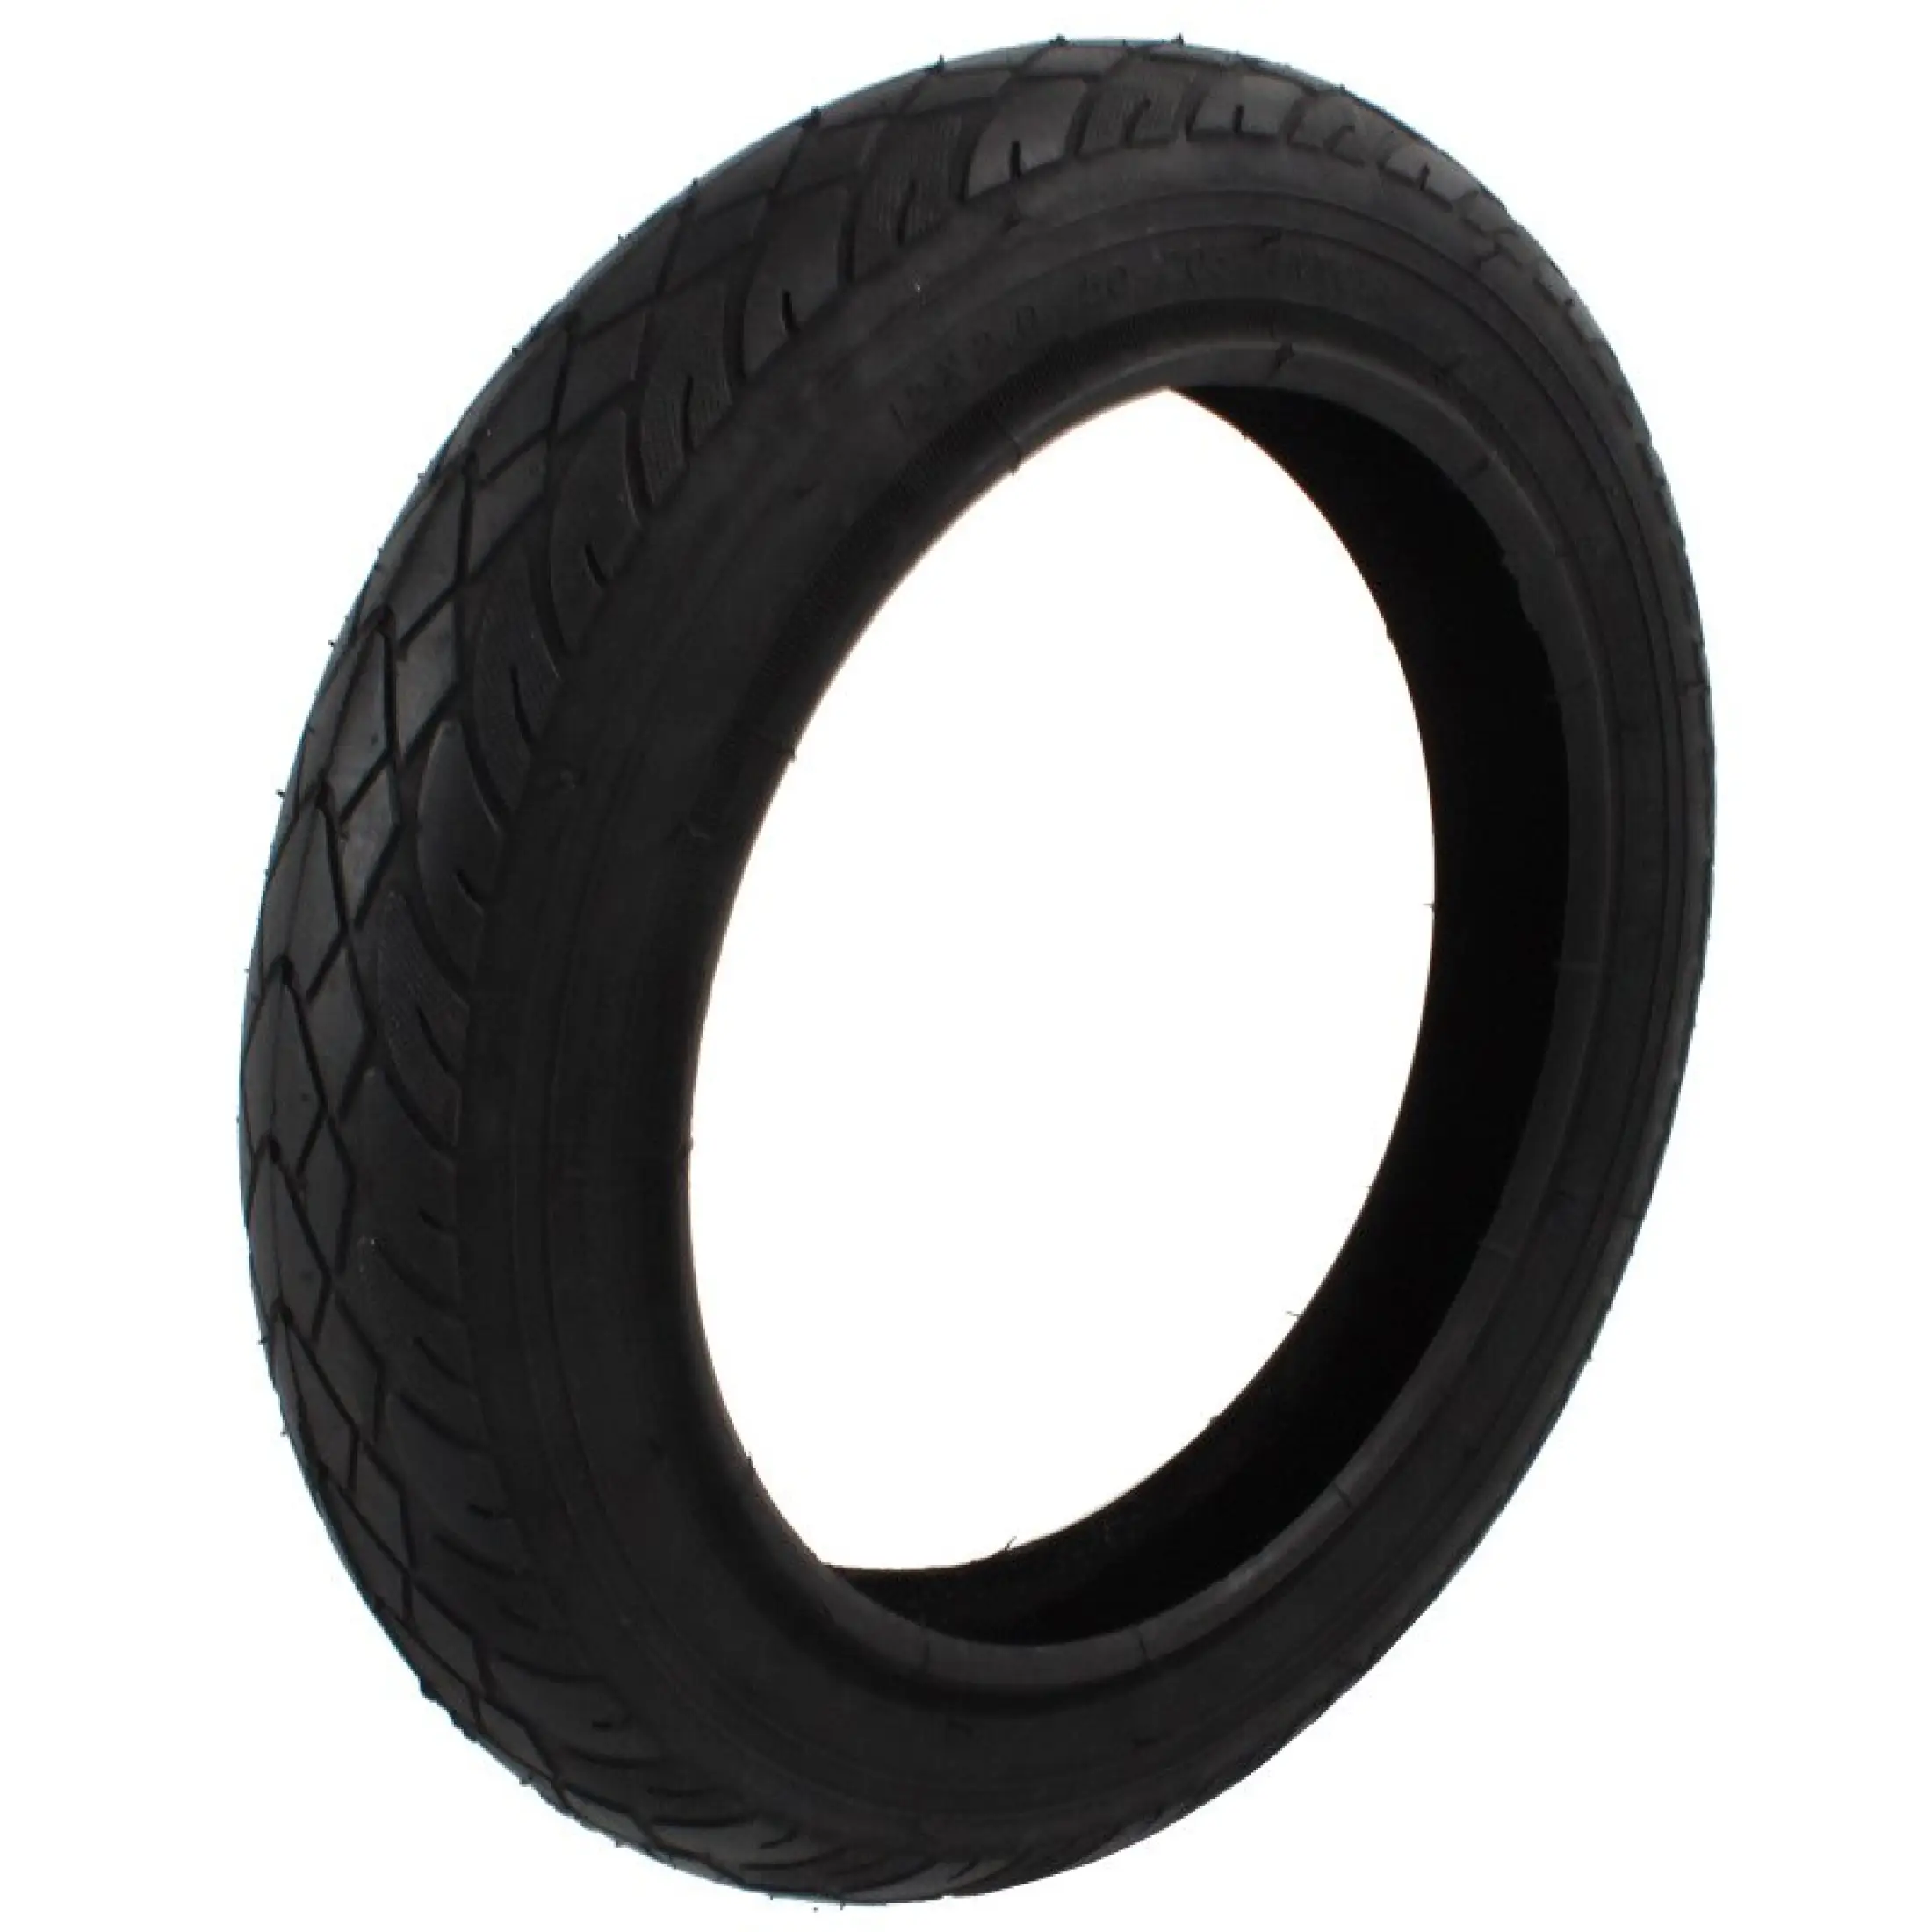 12 inch bike tire